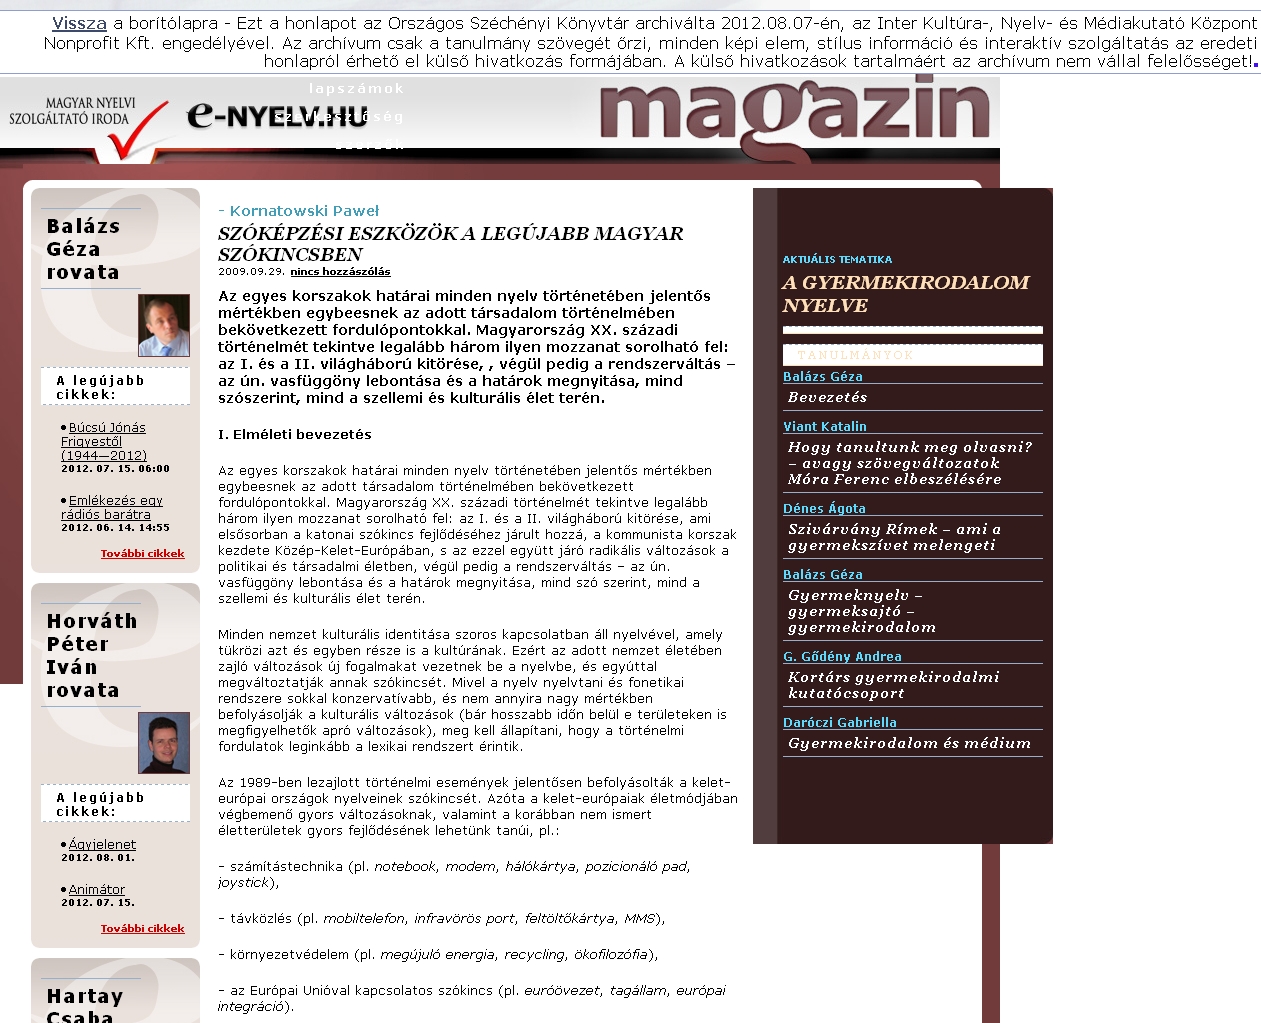 E-nyelv.hu magazin 2012.08.07.